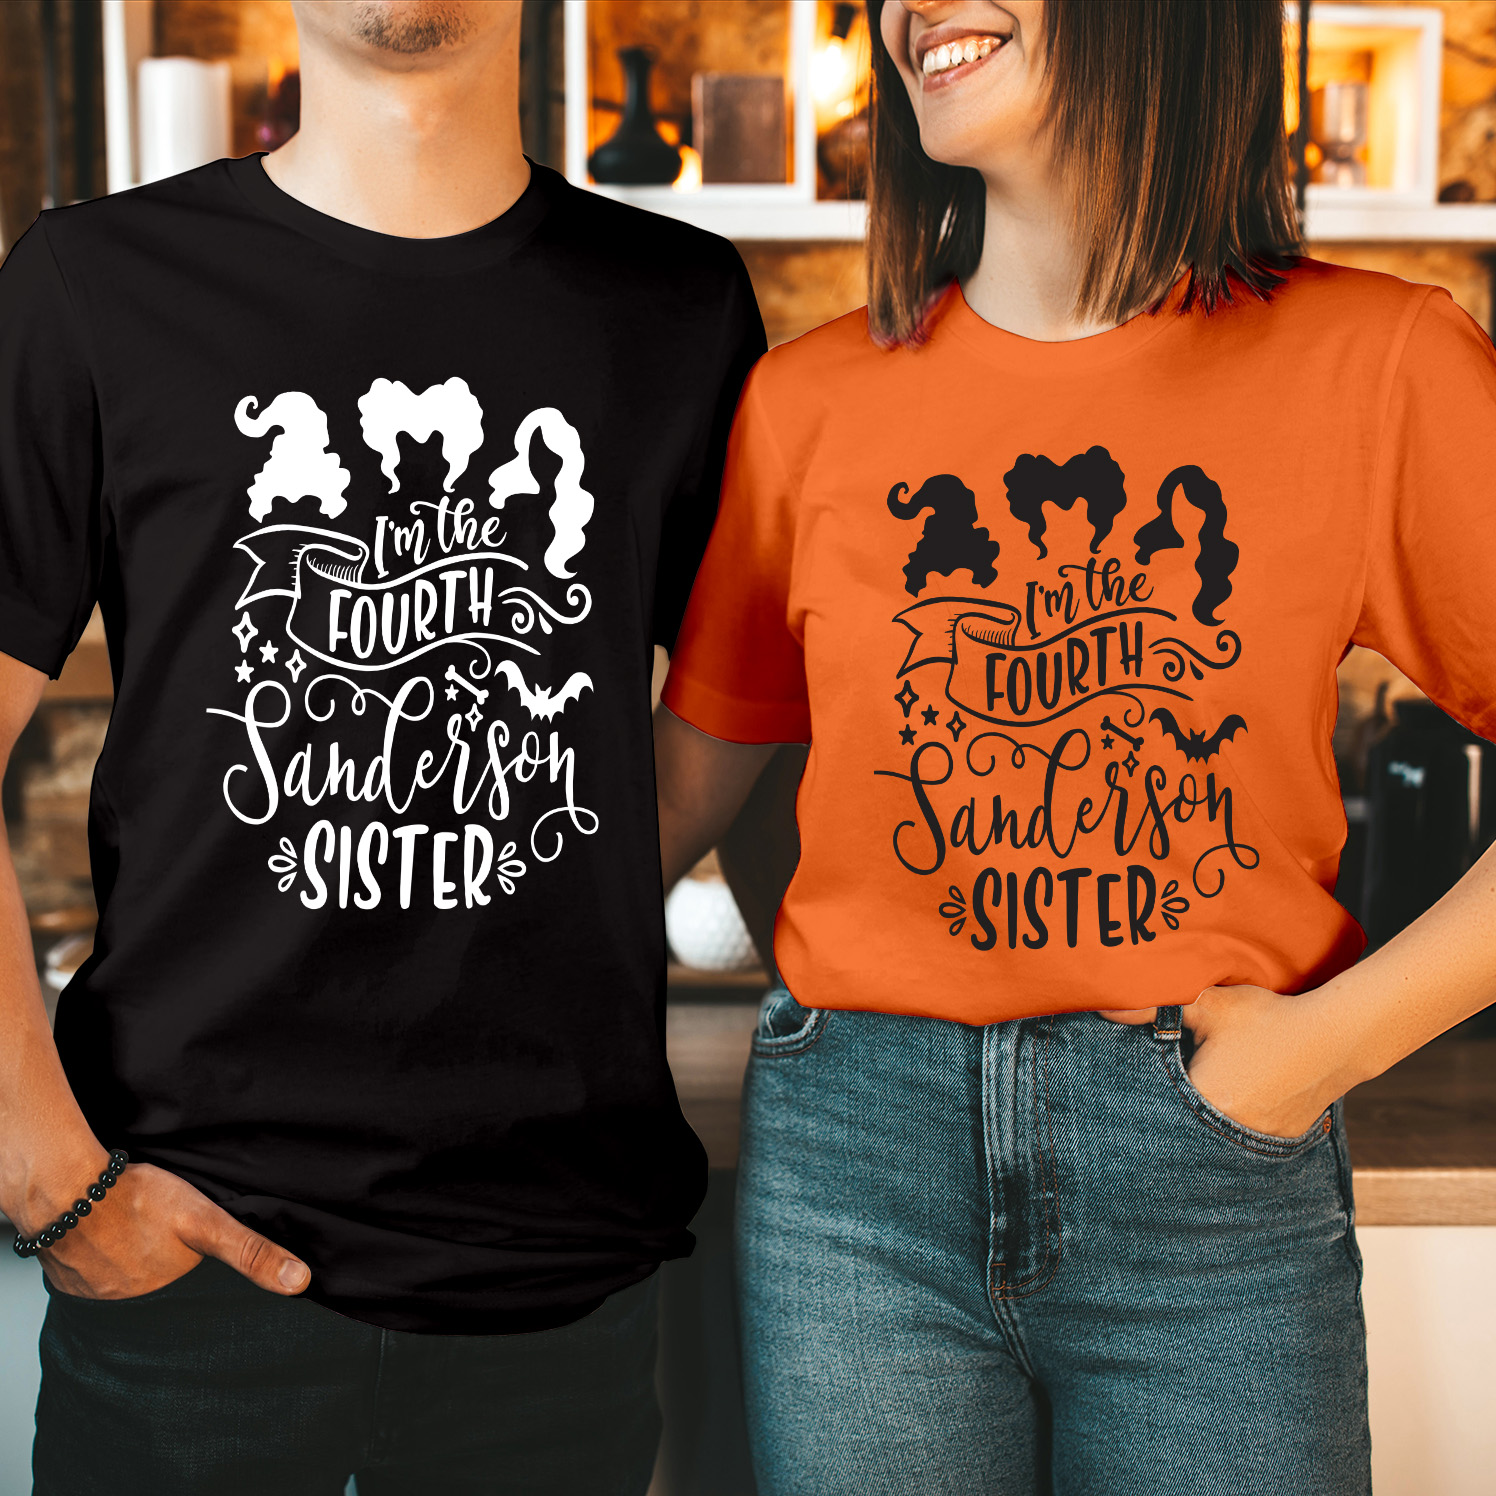 I'm The Fourth Sanderson Sister Hocus Pocus Halloween T-Shirt Horror Castle Spooky Vibes Halloween Movie Funny Men Women Kids Unisex Gift T Shirt